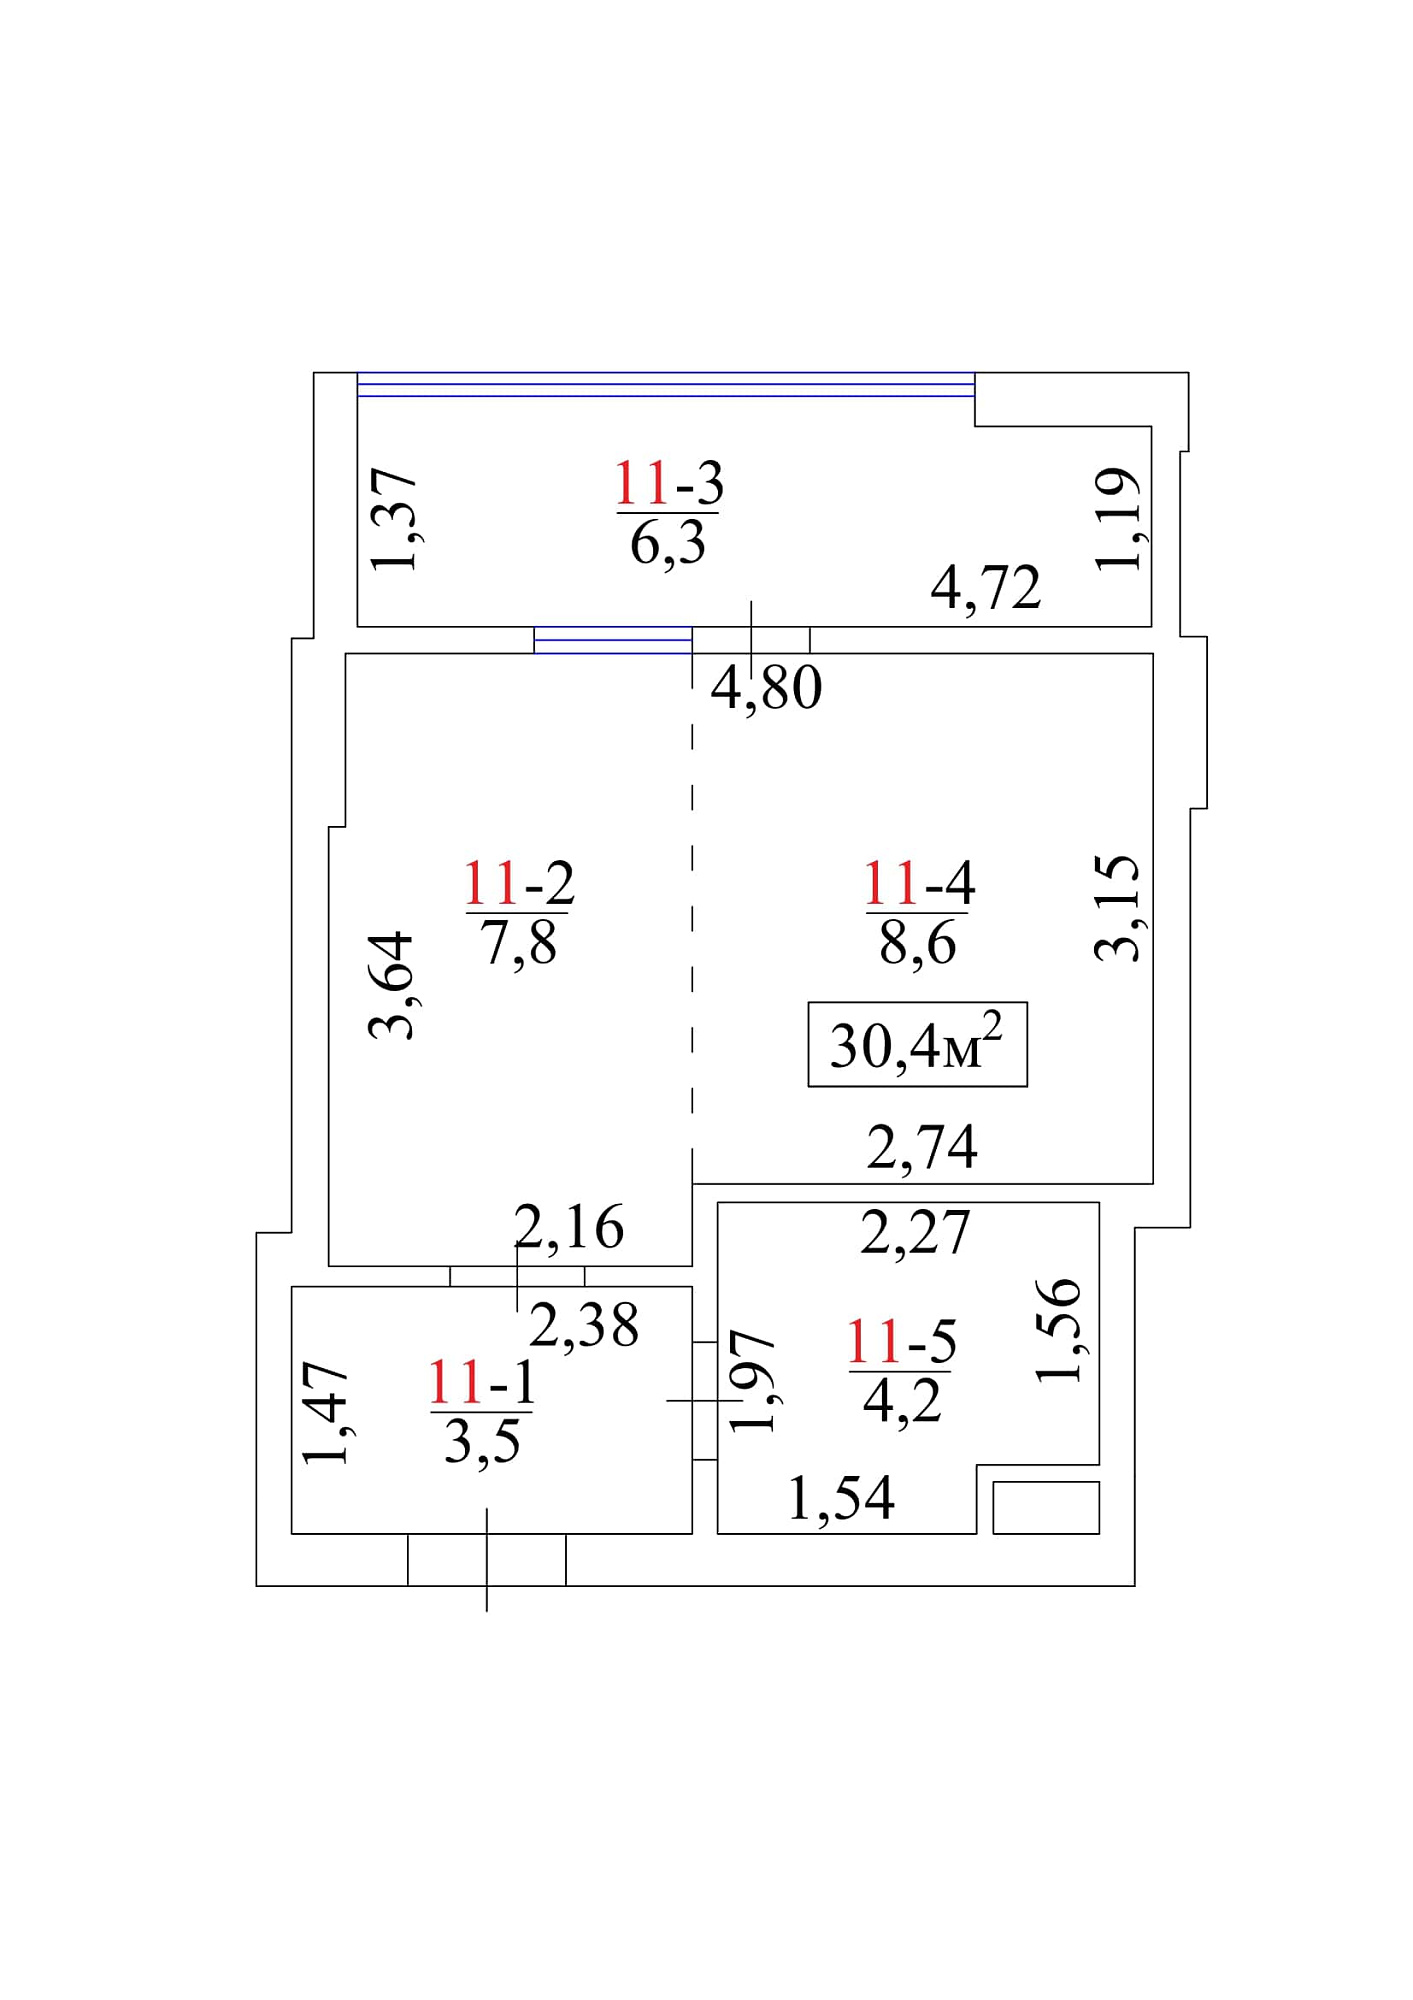 Planning Smart flats area 30.4m2, AB-01-02/00013.